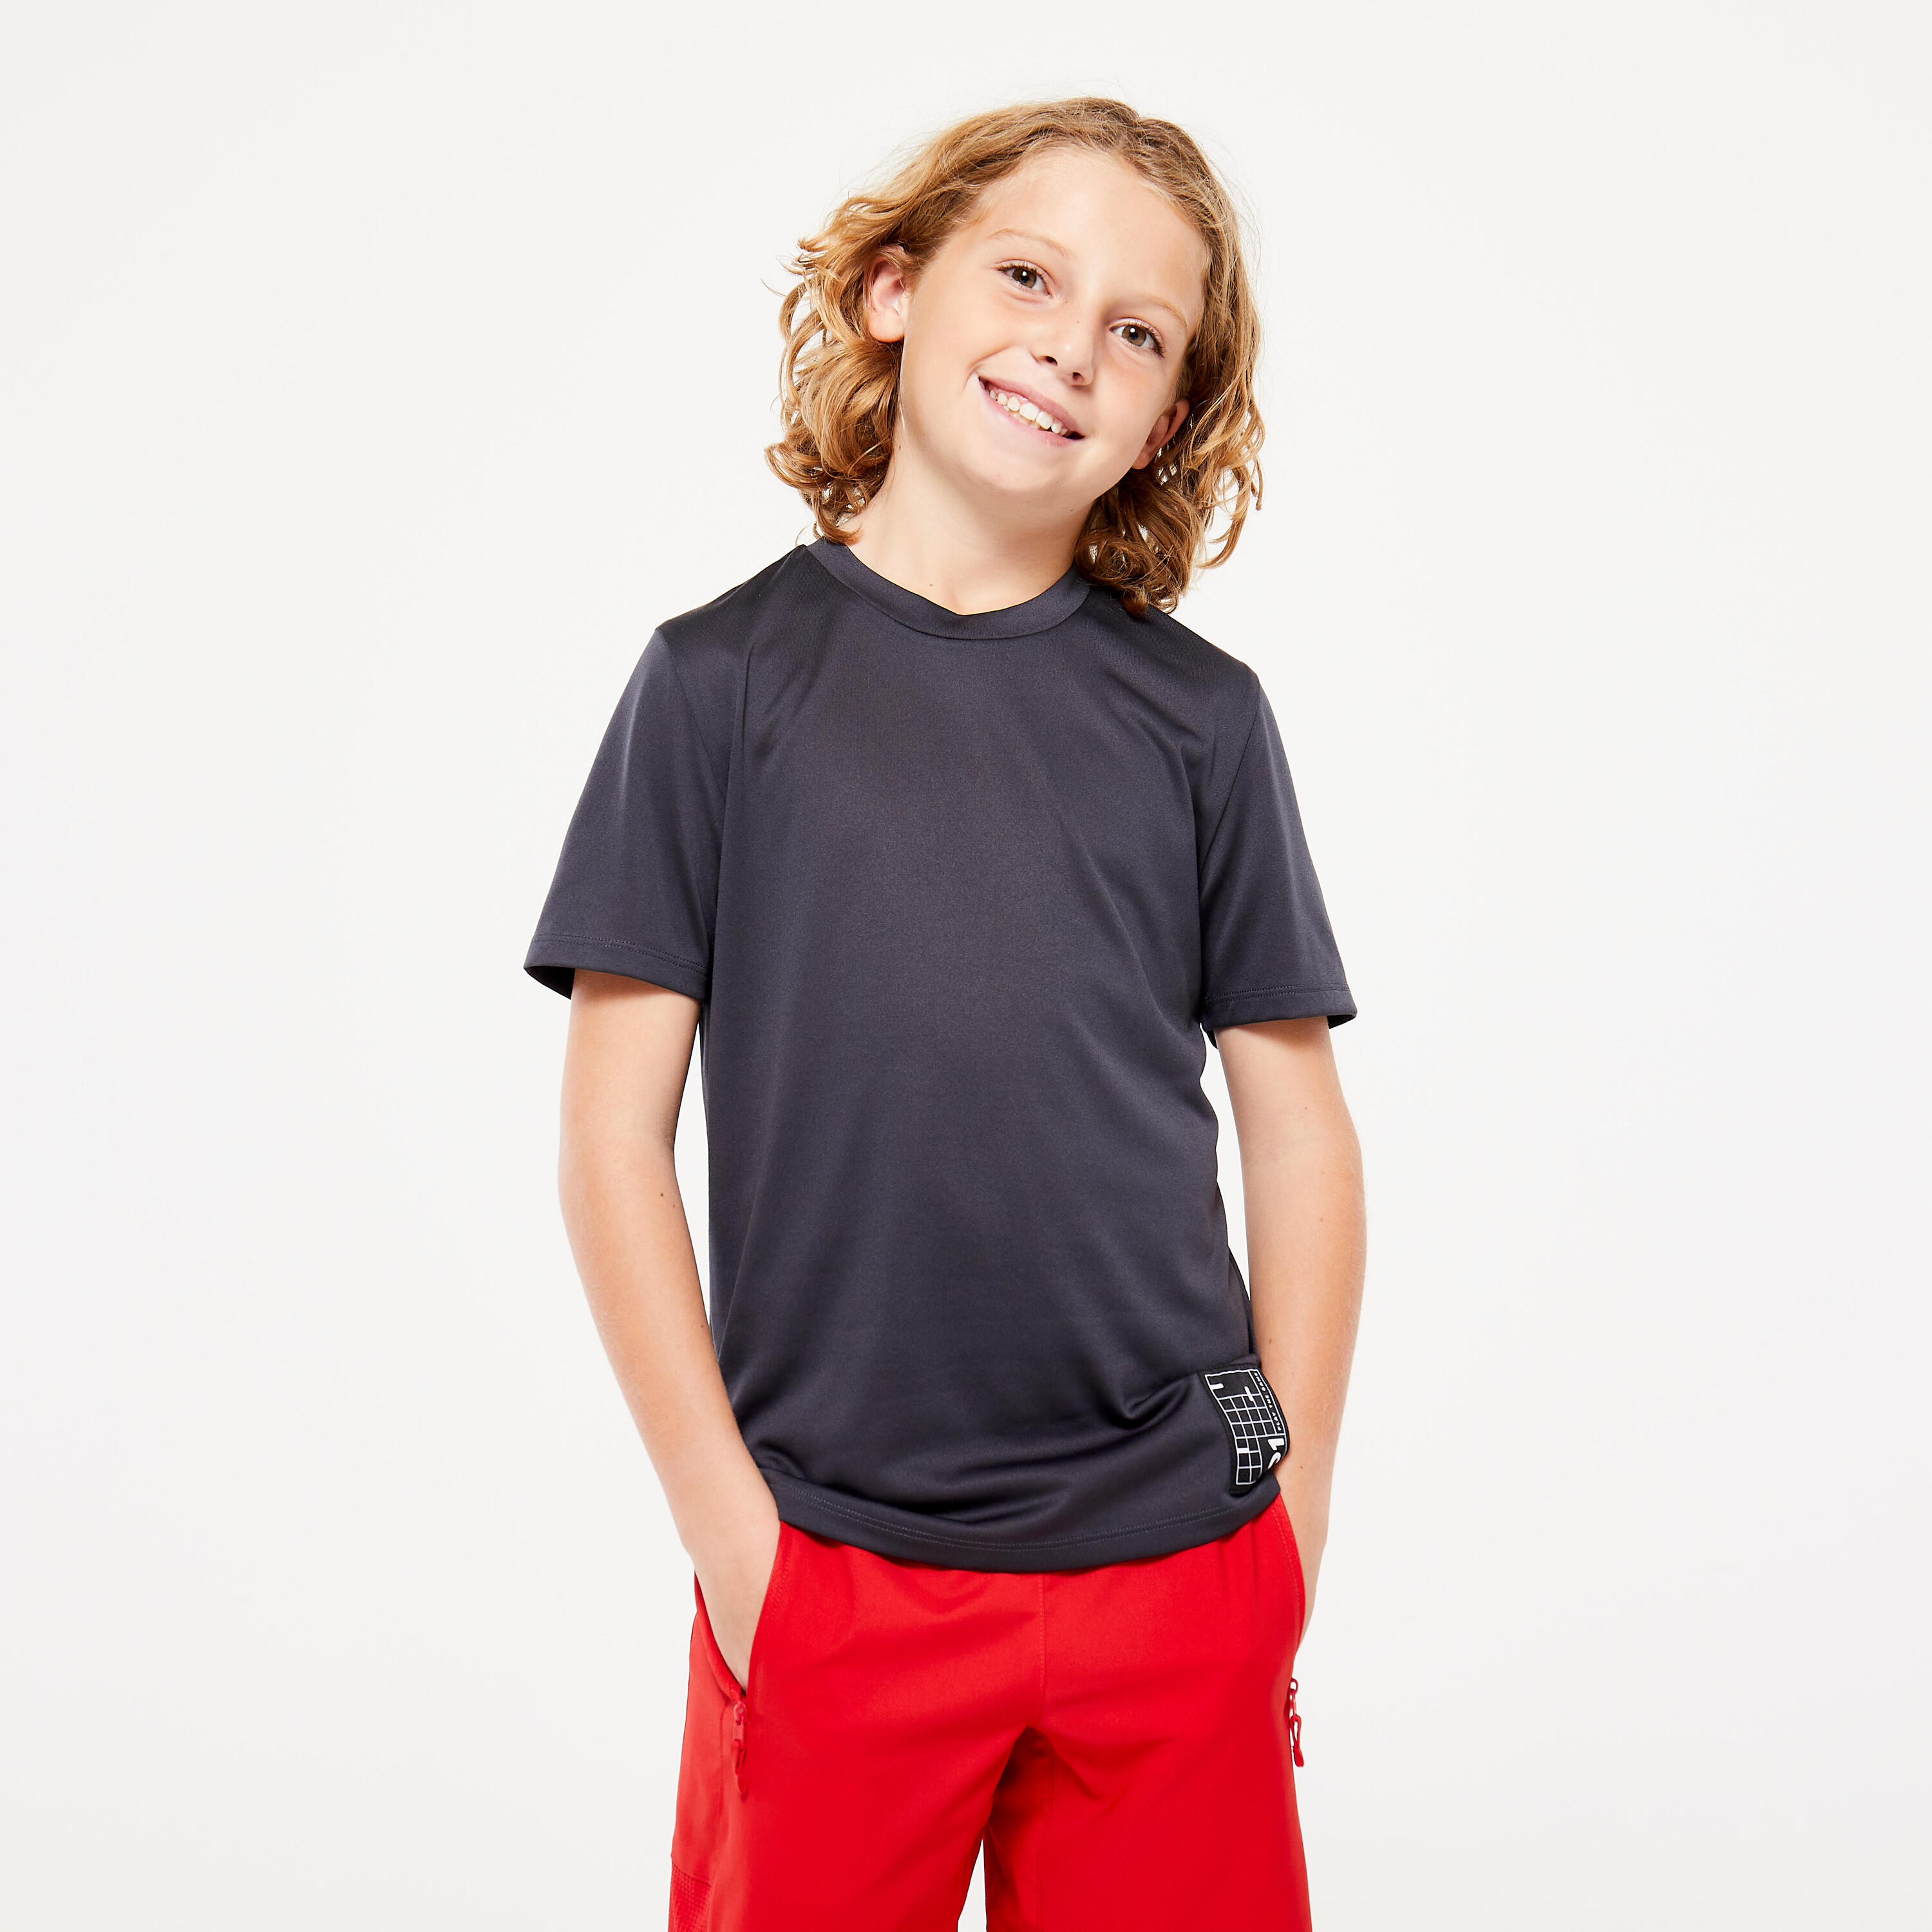 DECATHLON Kids' Breathable T-Shirt - Carbon Grey